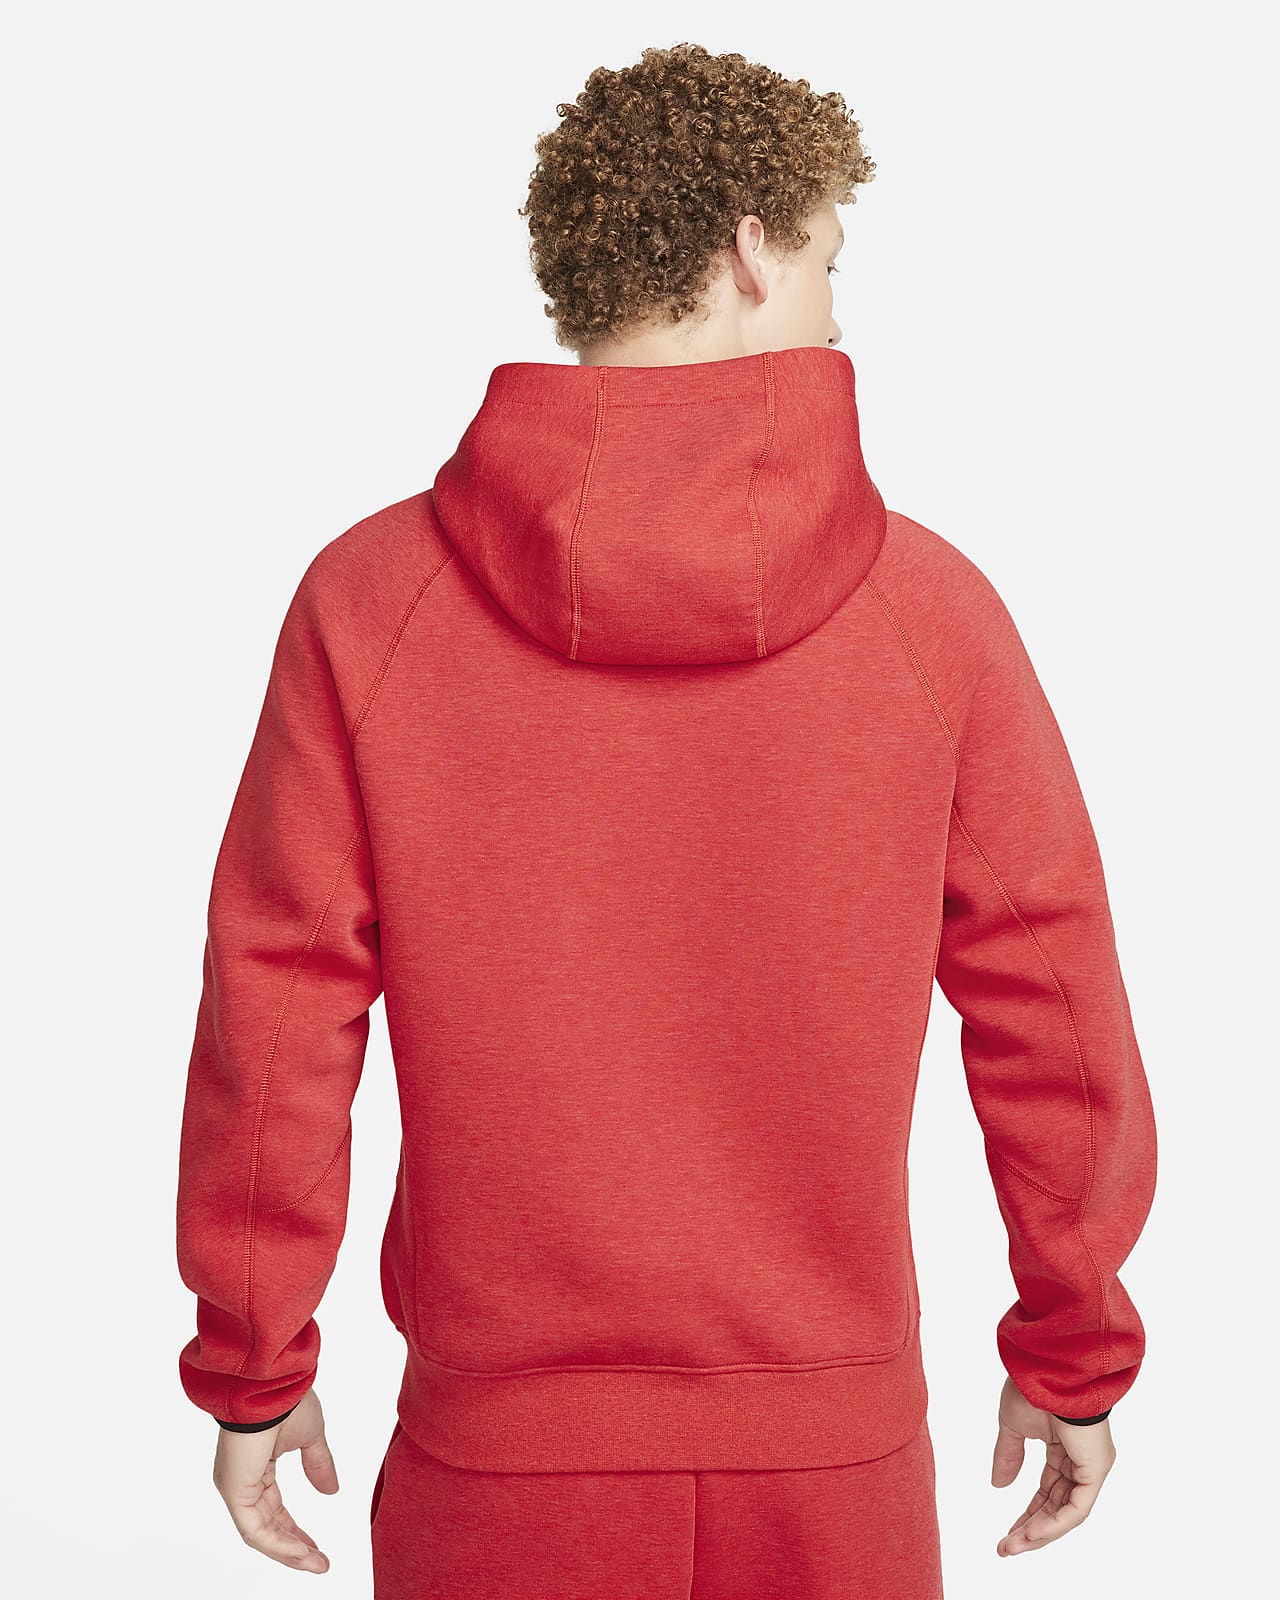 Red Tech Fleece Clothing.